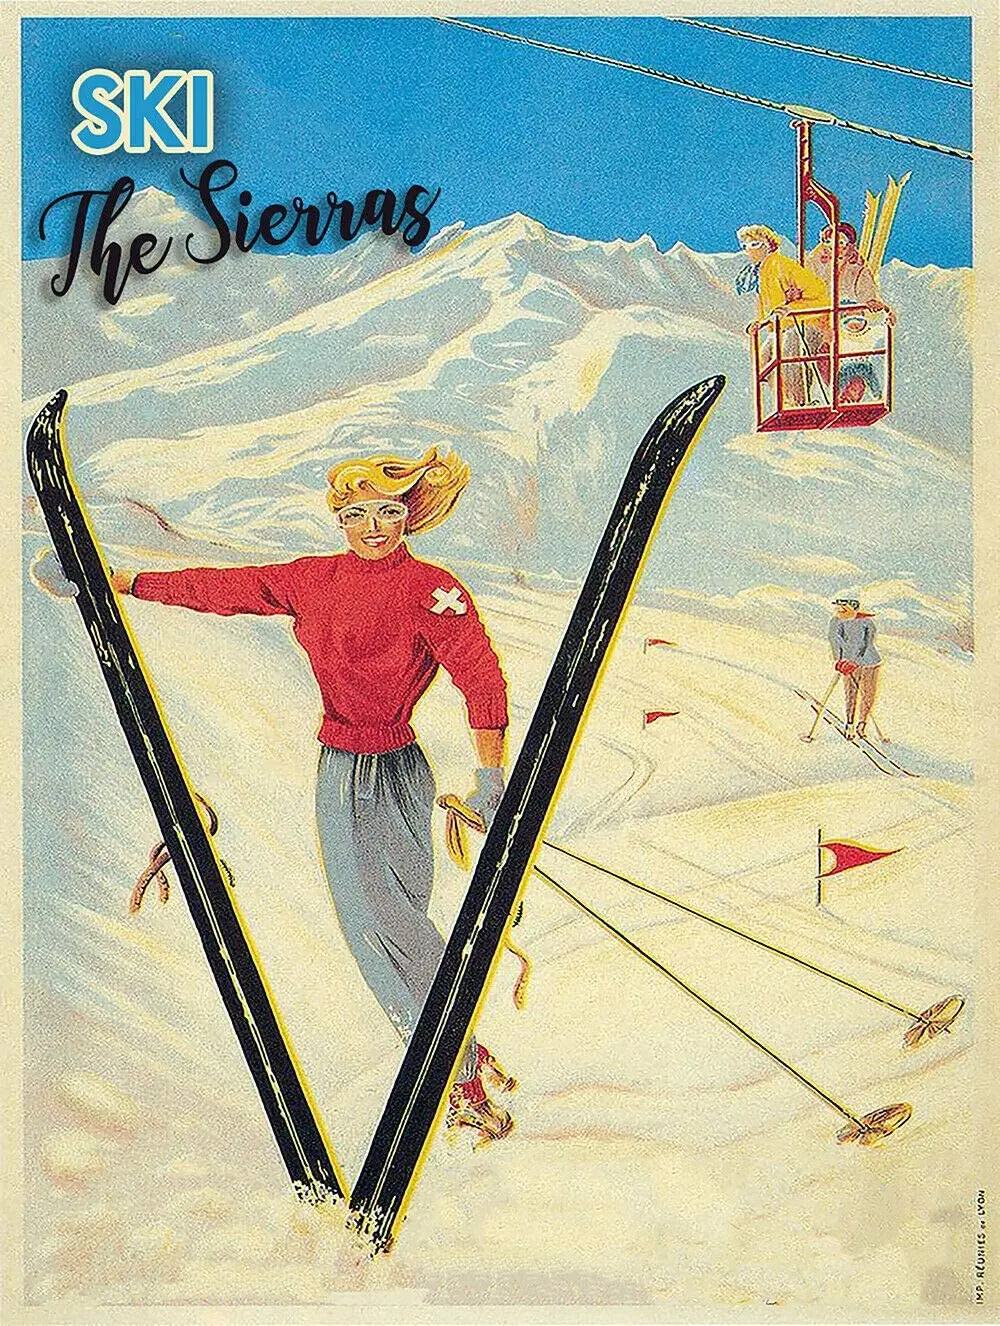 

New Vintage Retro Metal Tin Sign Ski The Sierras Mountain Garage Street & Home Bar Club Hotel Wall Decor Plaque Signs 12X8Inch